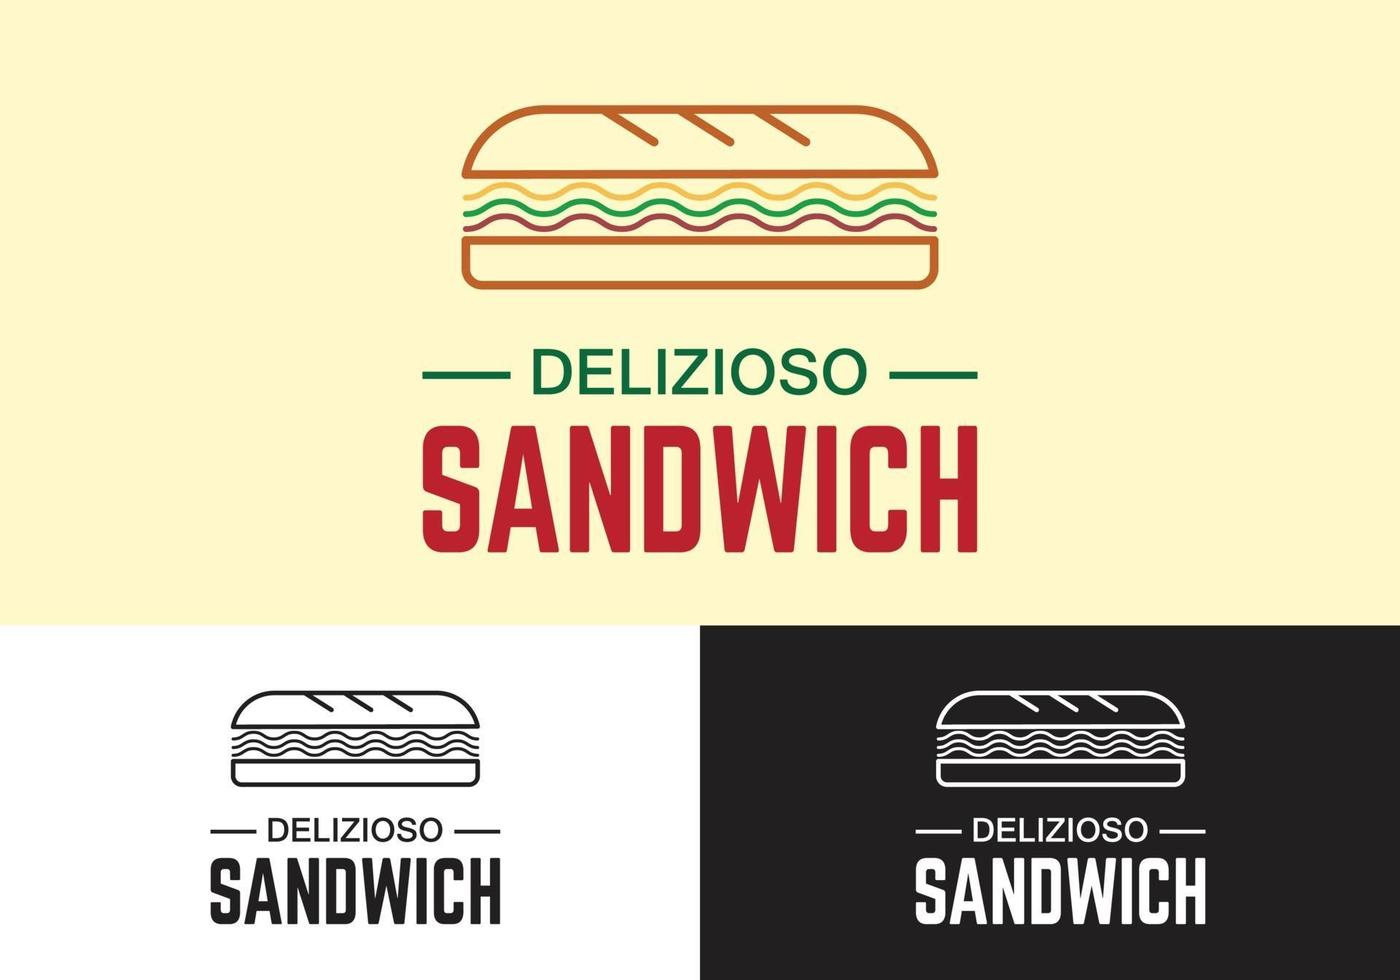 concept de logo de restaurant sandwich burger food truck vecteur